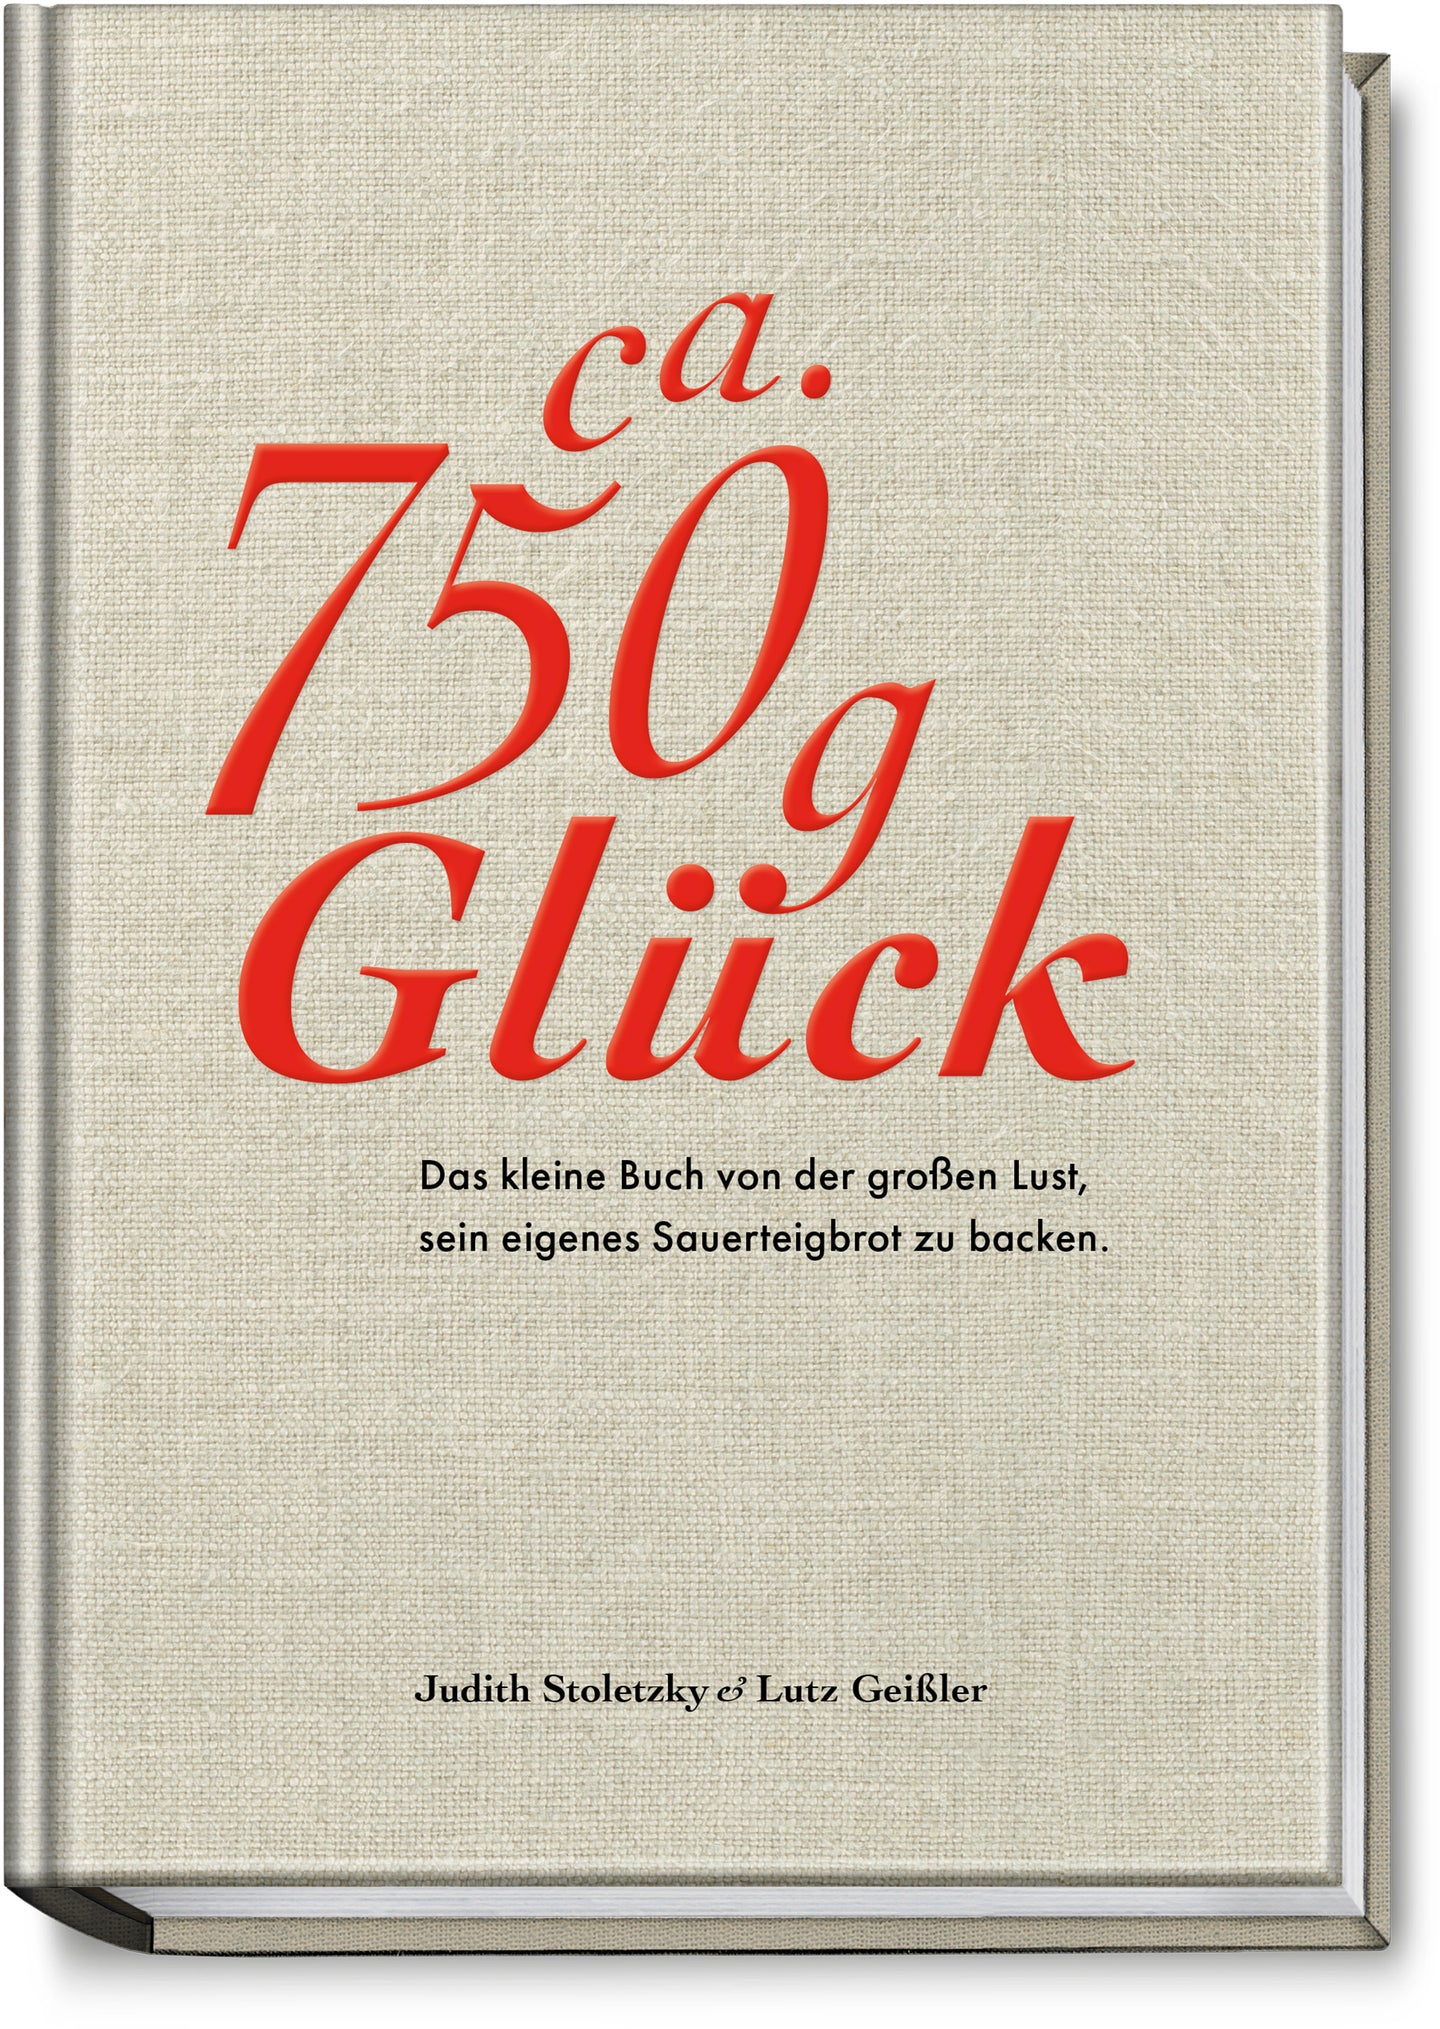 Ca. 750g Glück, Judith Stoletzky & Lutz Geißler